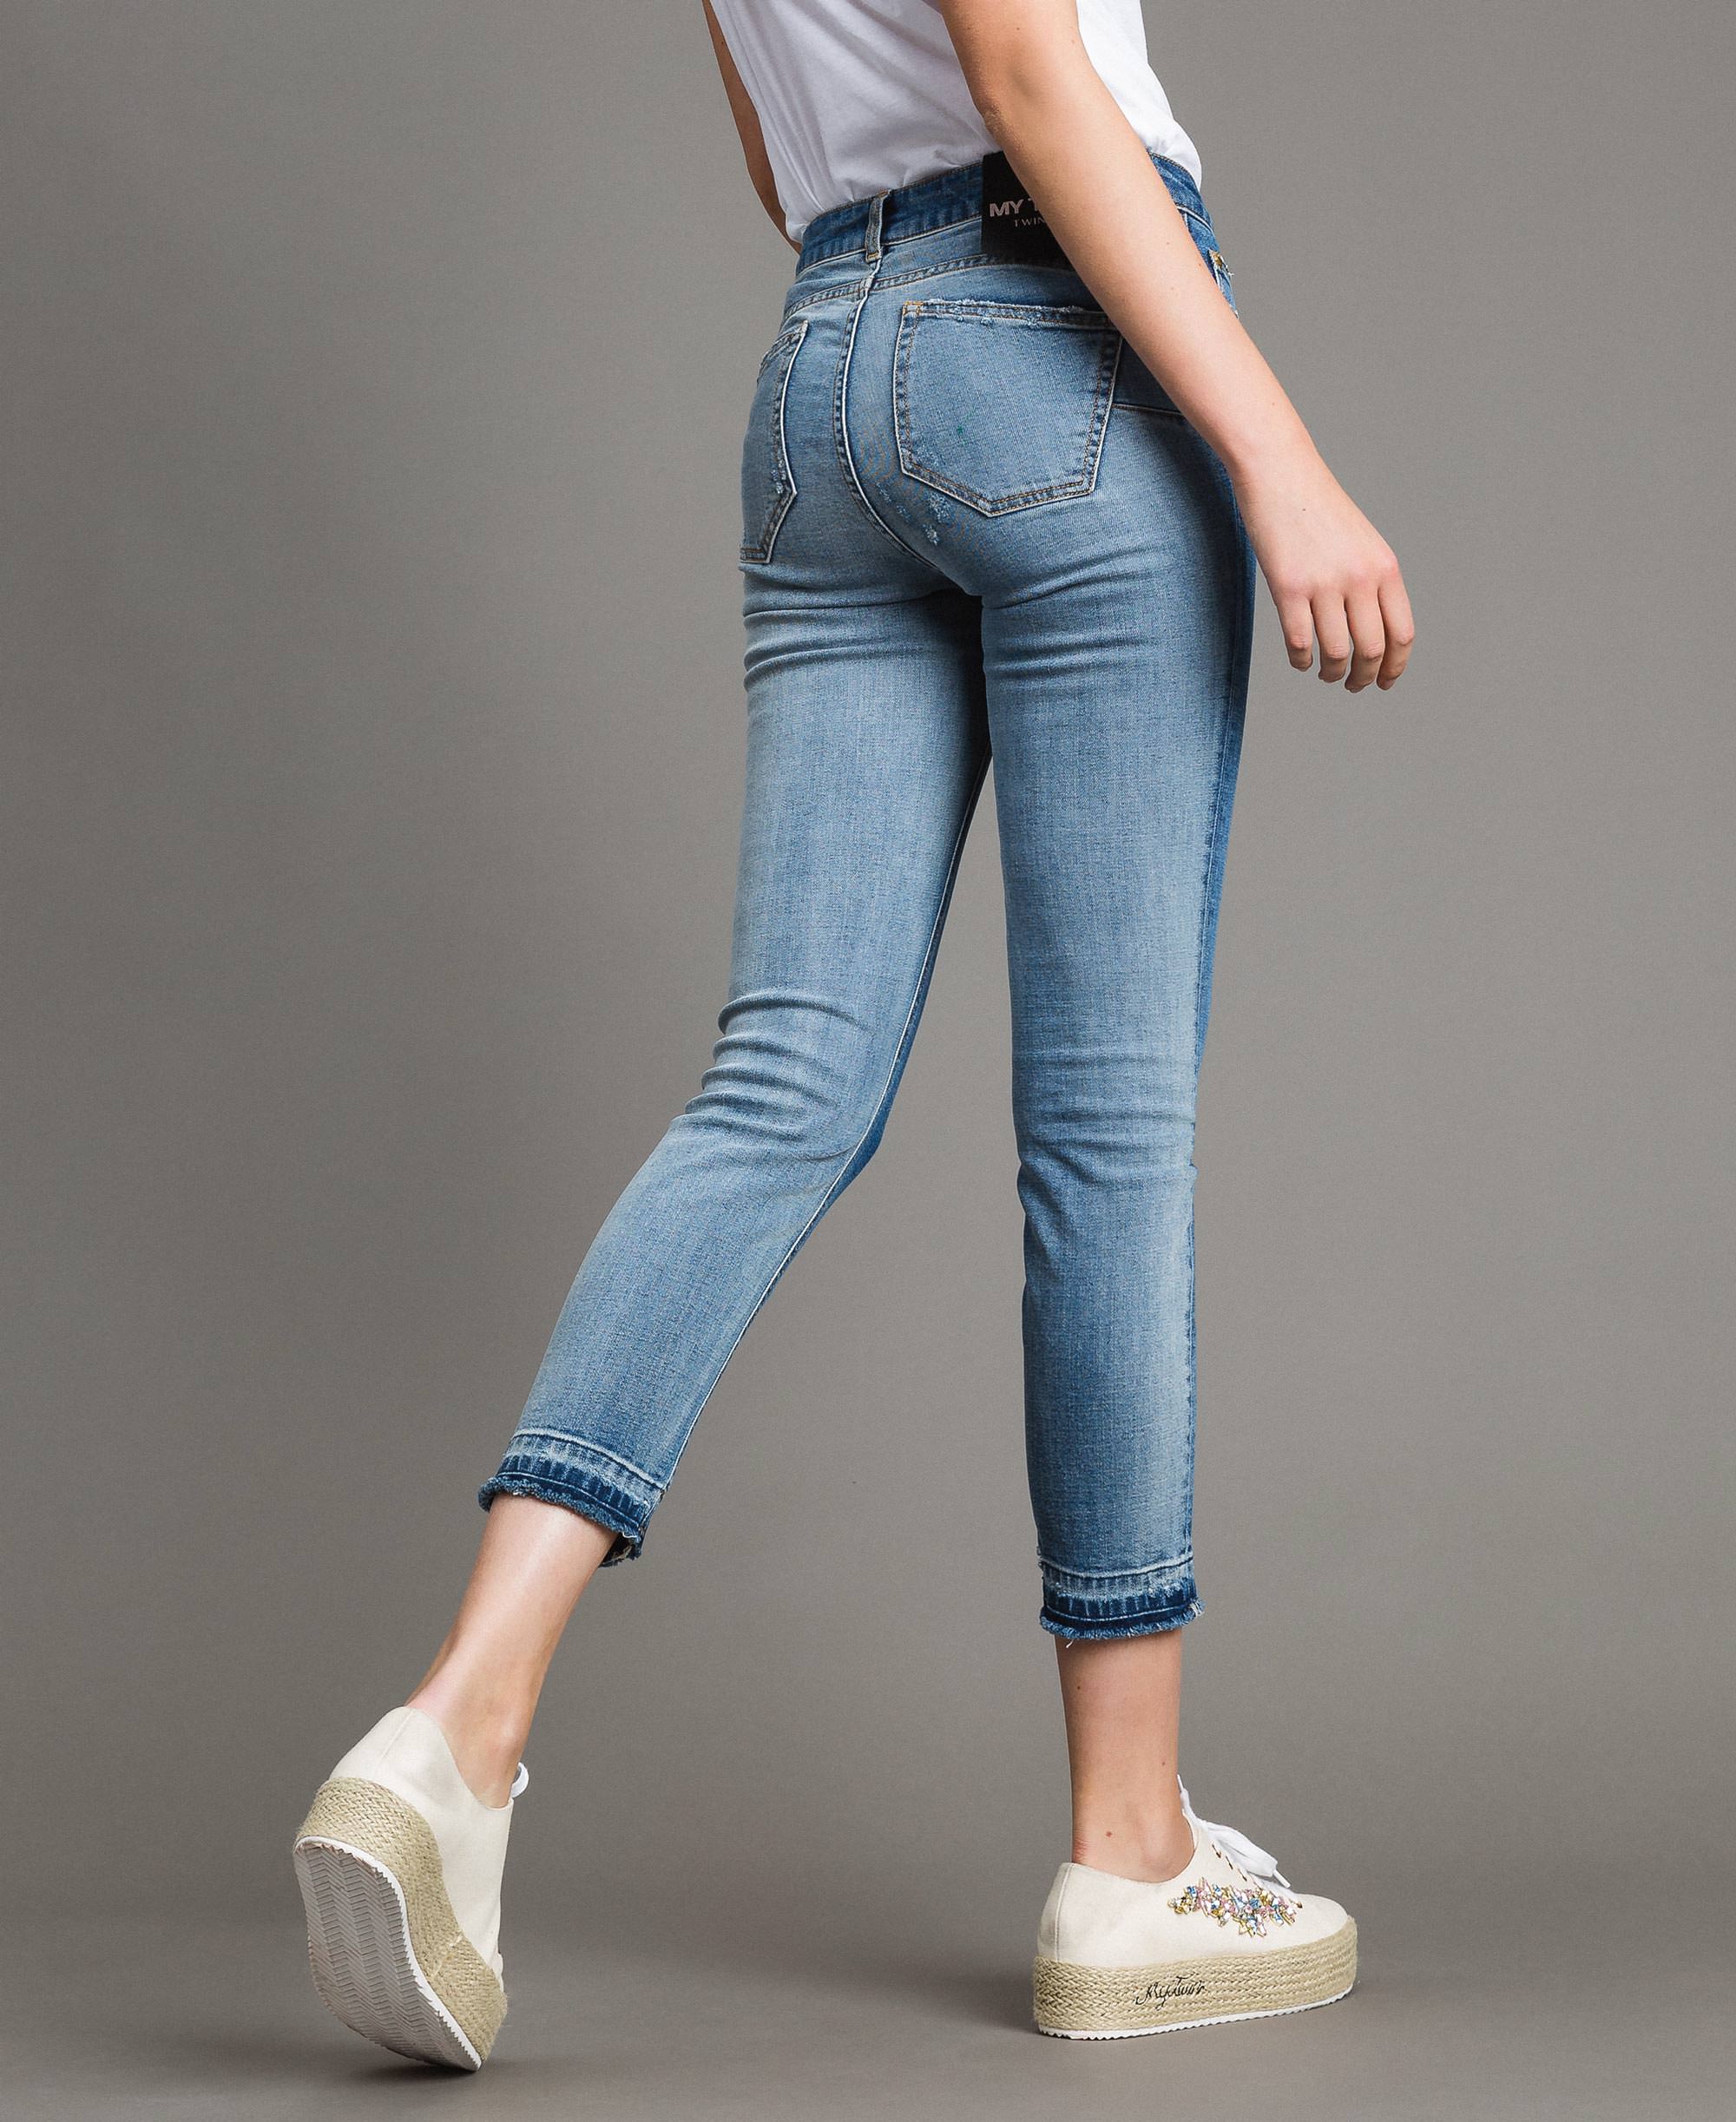 Ladies New Look Skinny Frayed Hem Jeans Blue Sizes 8-16 Leg 25 26 27 28